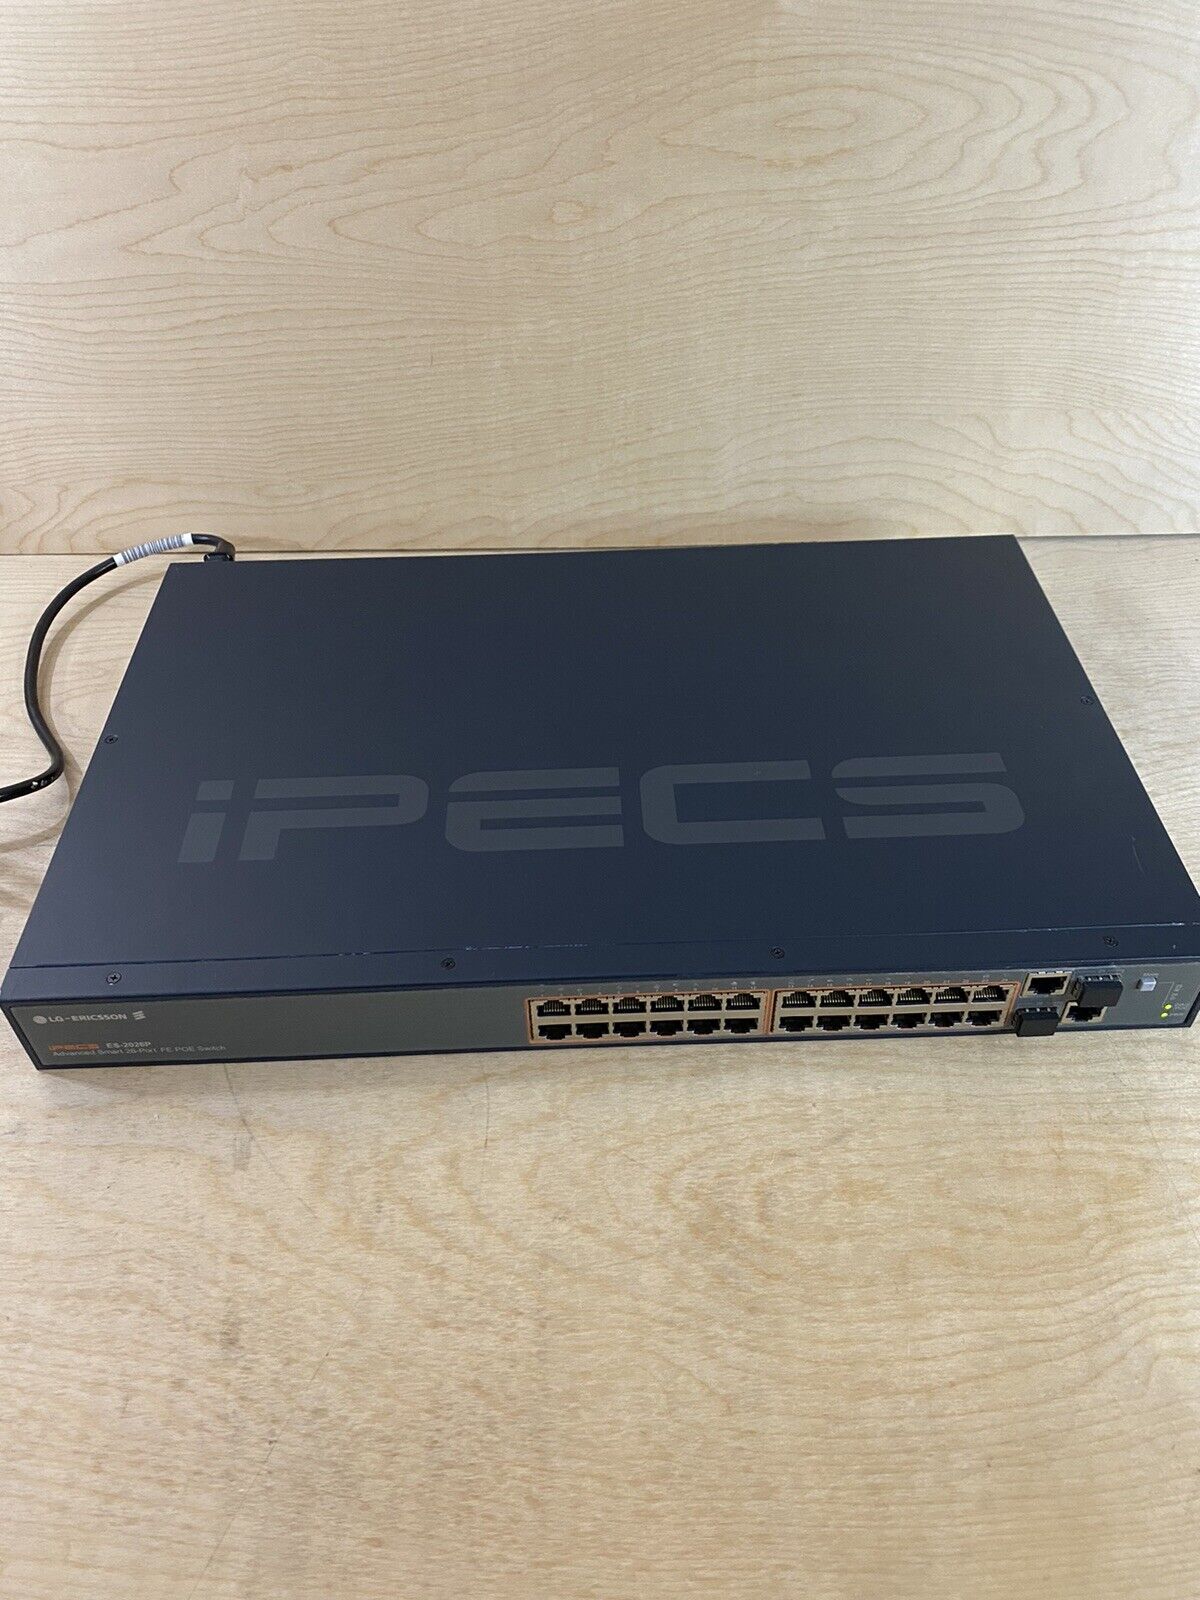 IPECS LG ERICSSON Advanced Smart 26 Port FE POE Switch Model ES-2026P Works